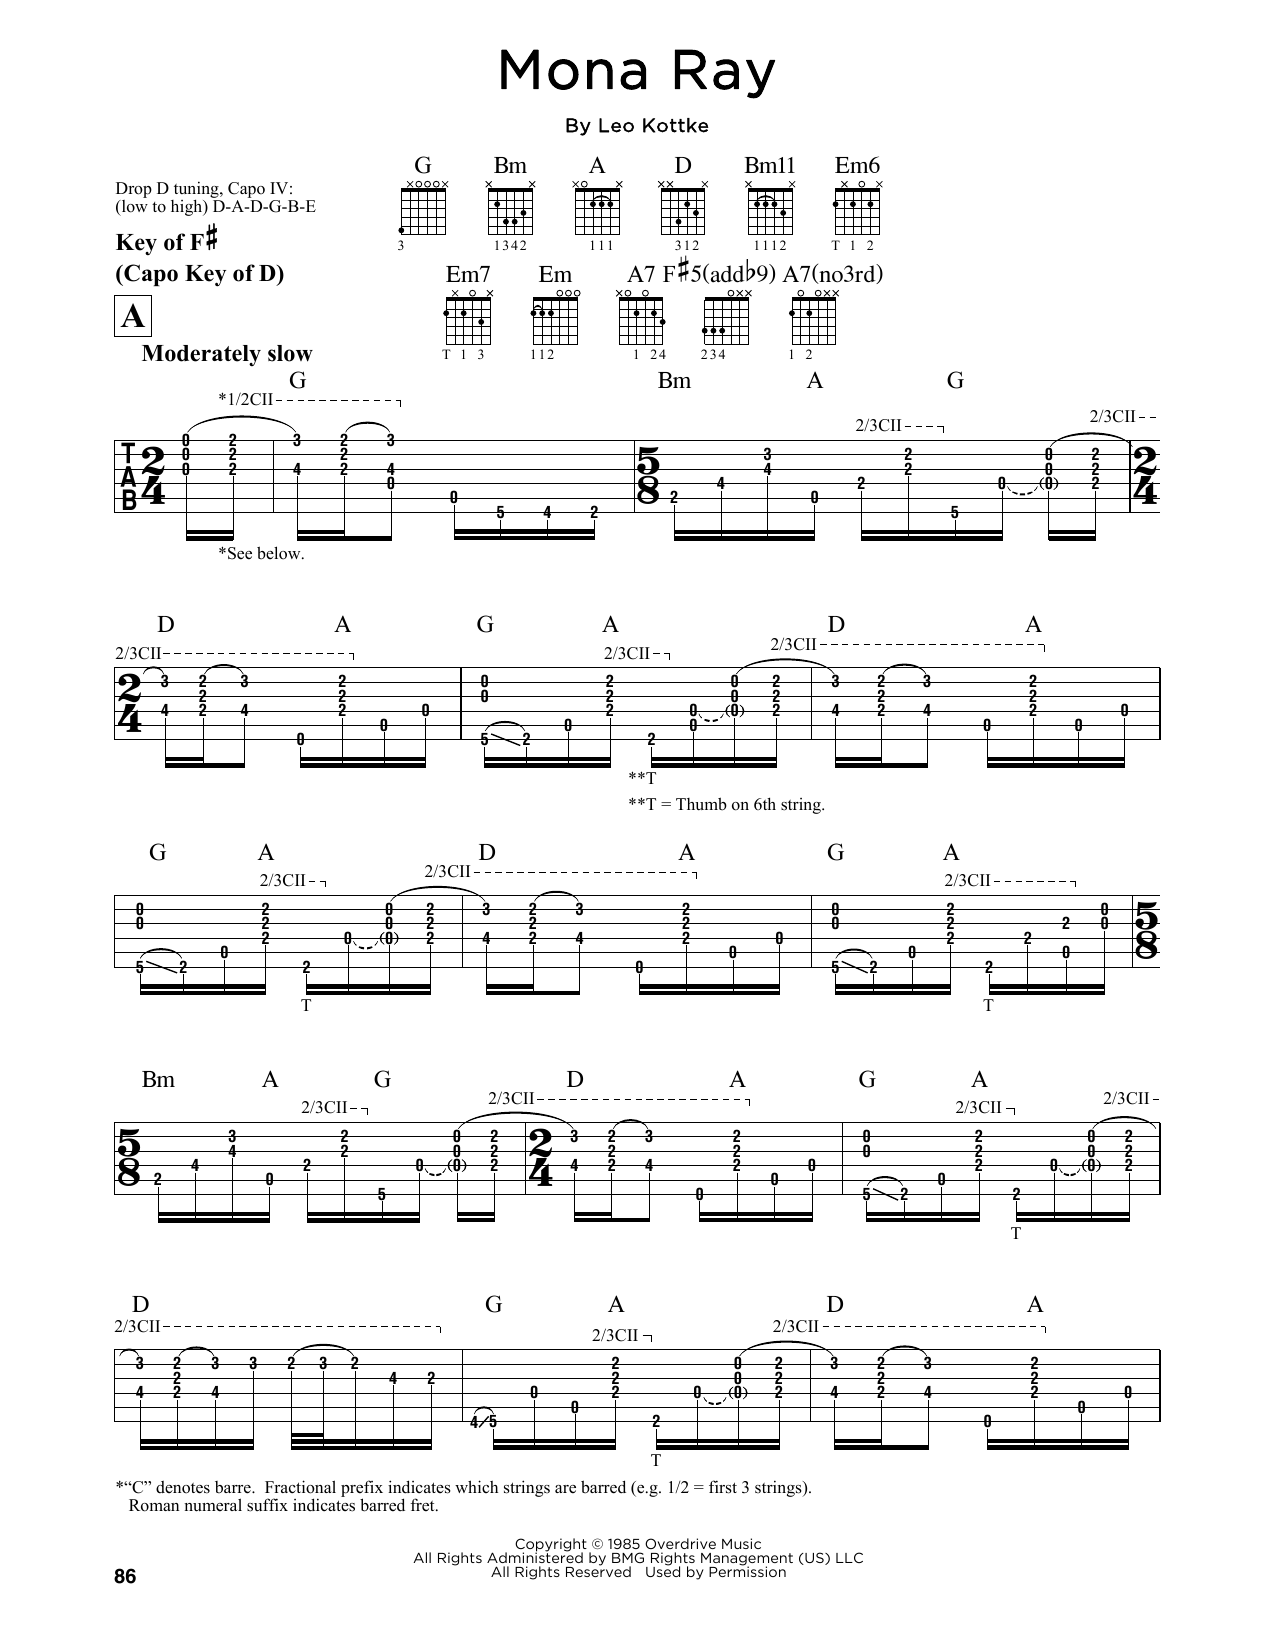 Leo Kottke Mona Ray Sheet Music Notes & Chords for Guitar Tab - Download or Print PDF